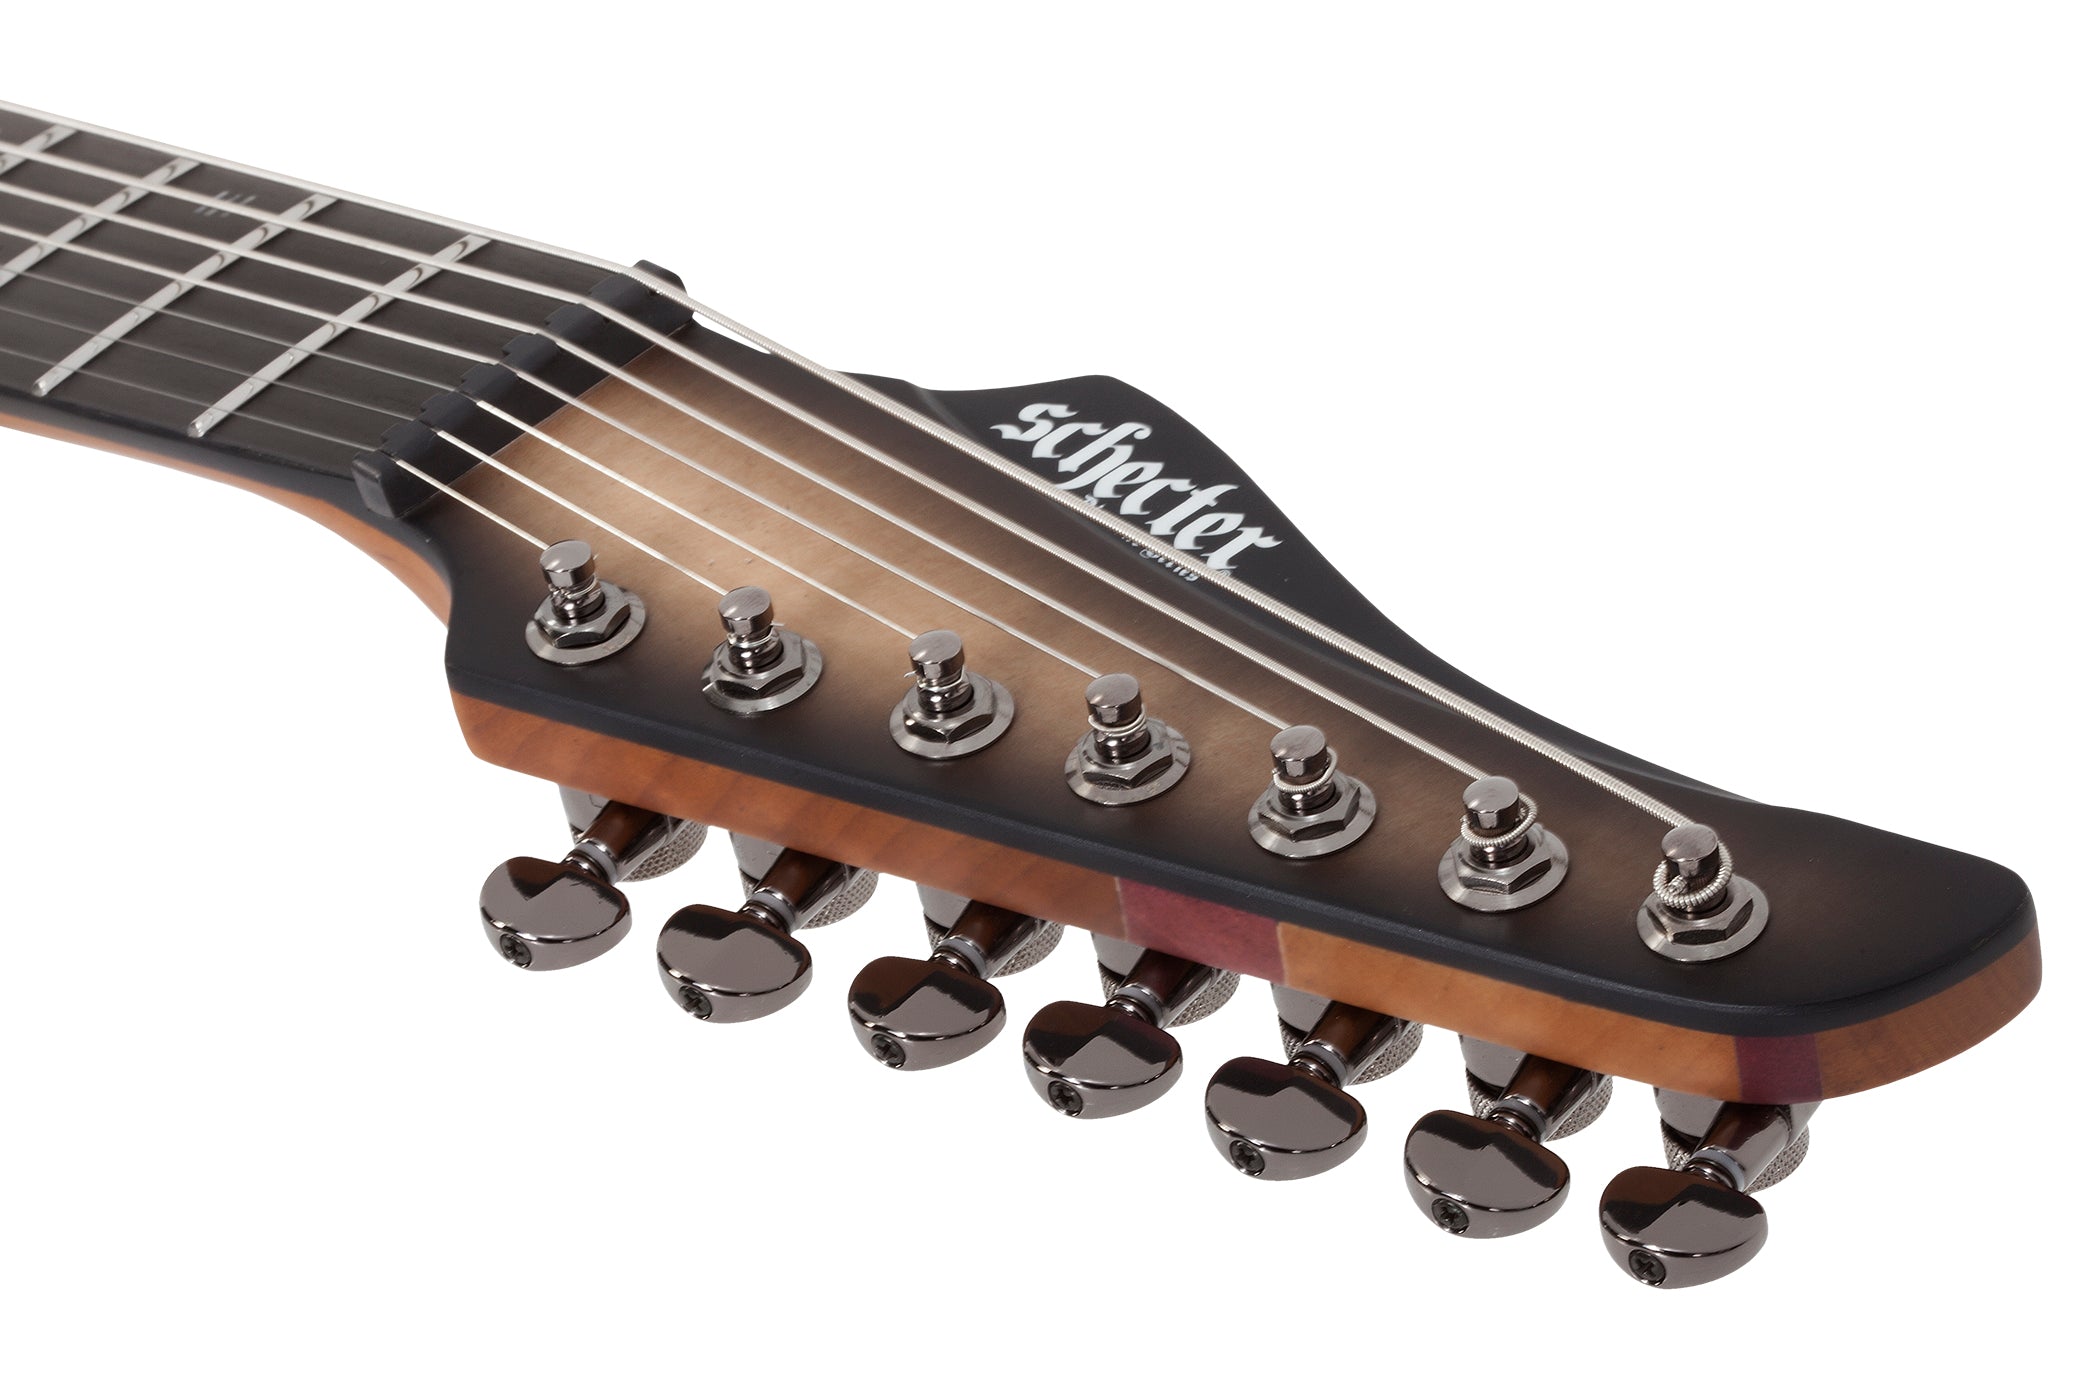 Schecter Banshee Mach-7 7-String Electric Guitar Ember Burst 2020 1424-SHC